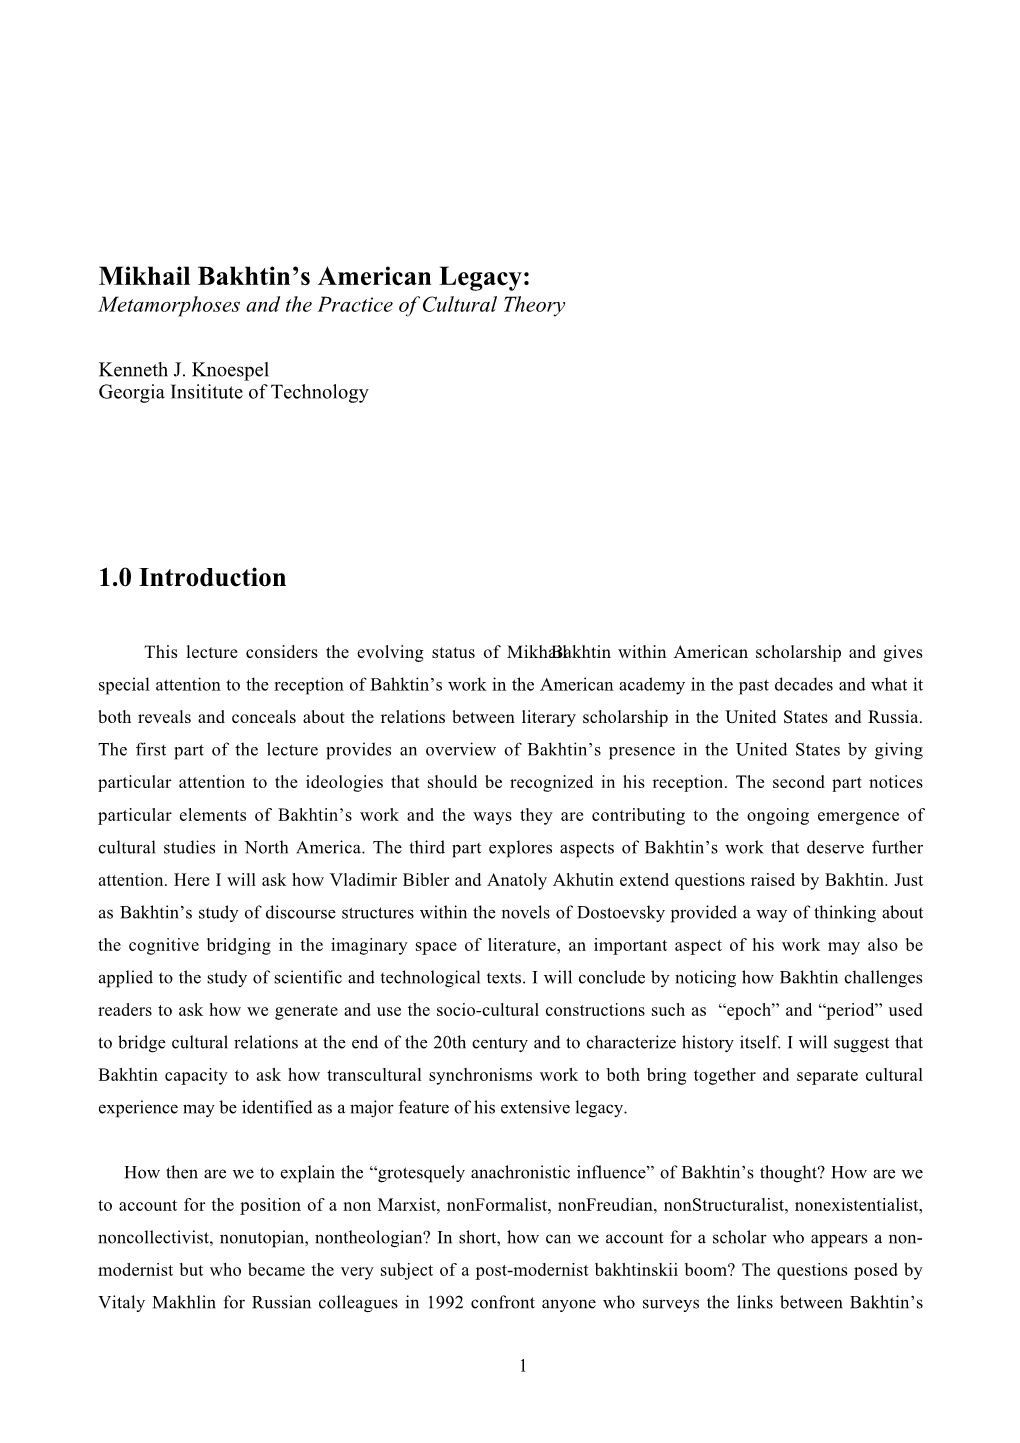 Mikhail Bakhtin's American Legacy: 1.0 Introduction